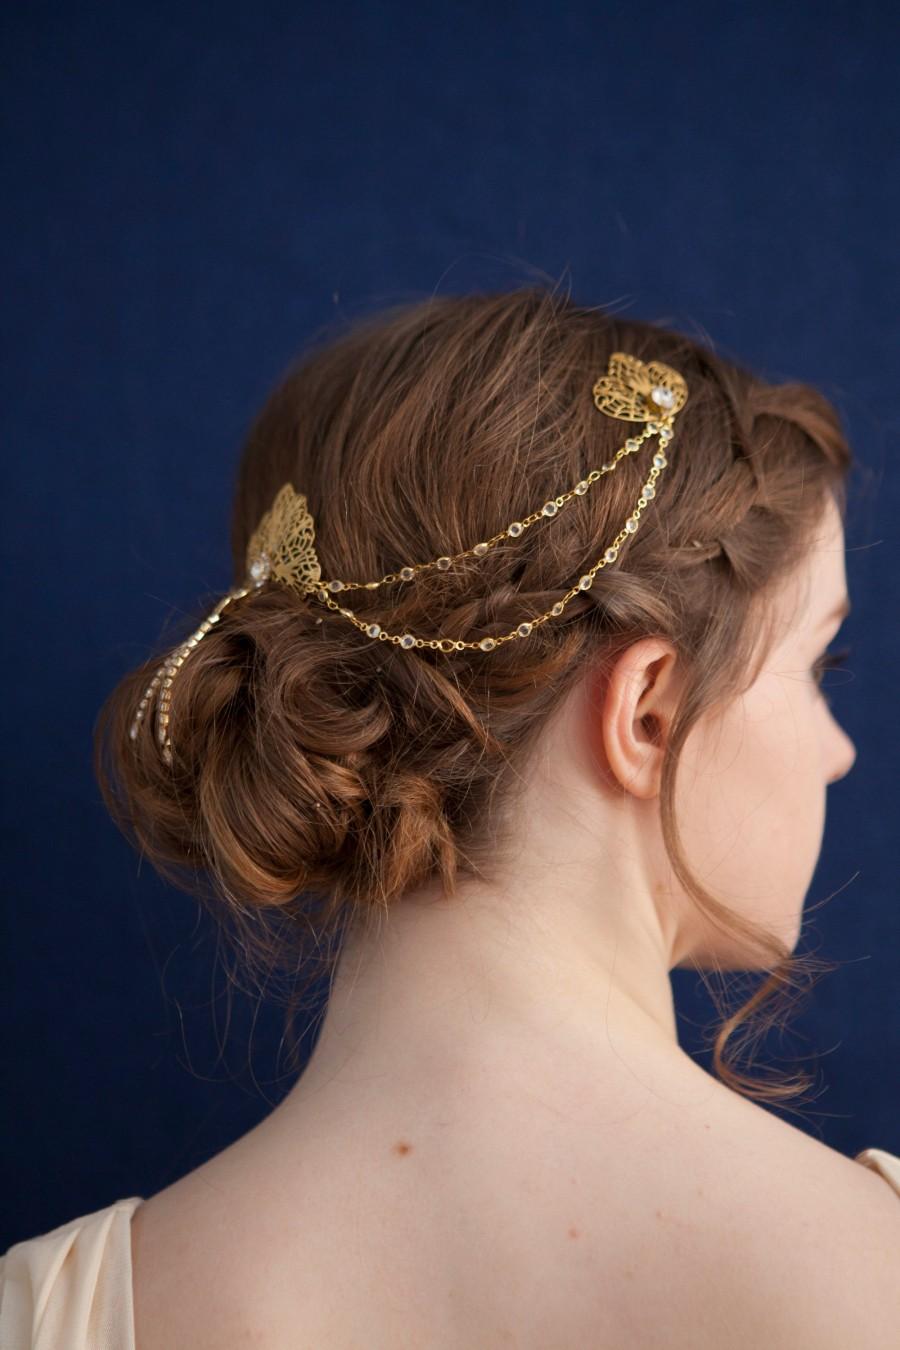 Wedding - Art Nouveau Wedding Headpiece with swags - Gold Bridal Headpiece - Hair Chain Style Accessory - 1920s Wedding dress